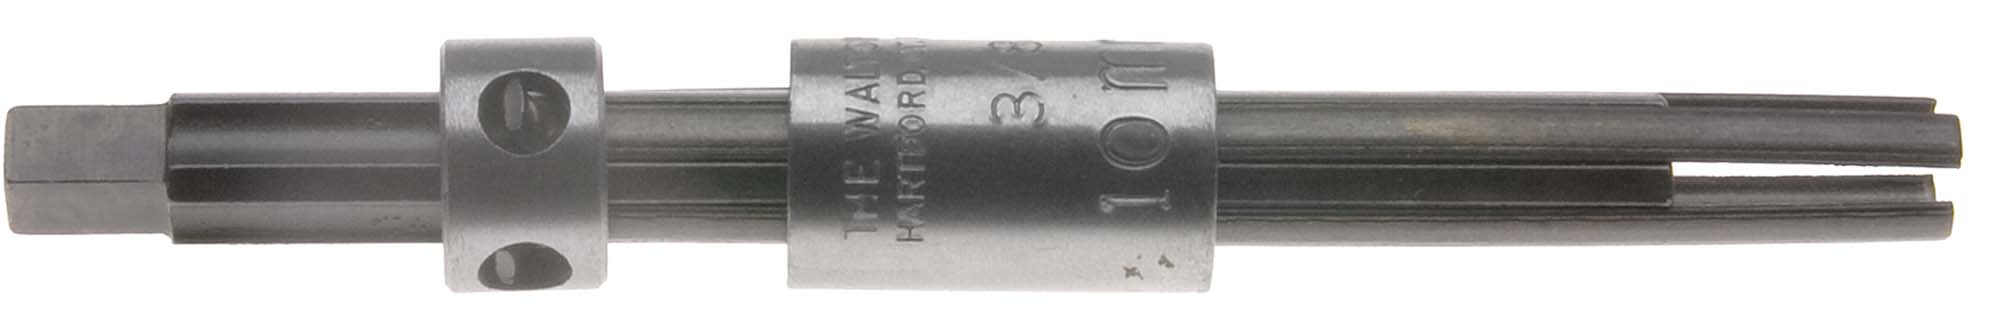 1/2" 4 Flute Walton Tap Extractor